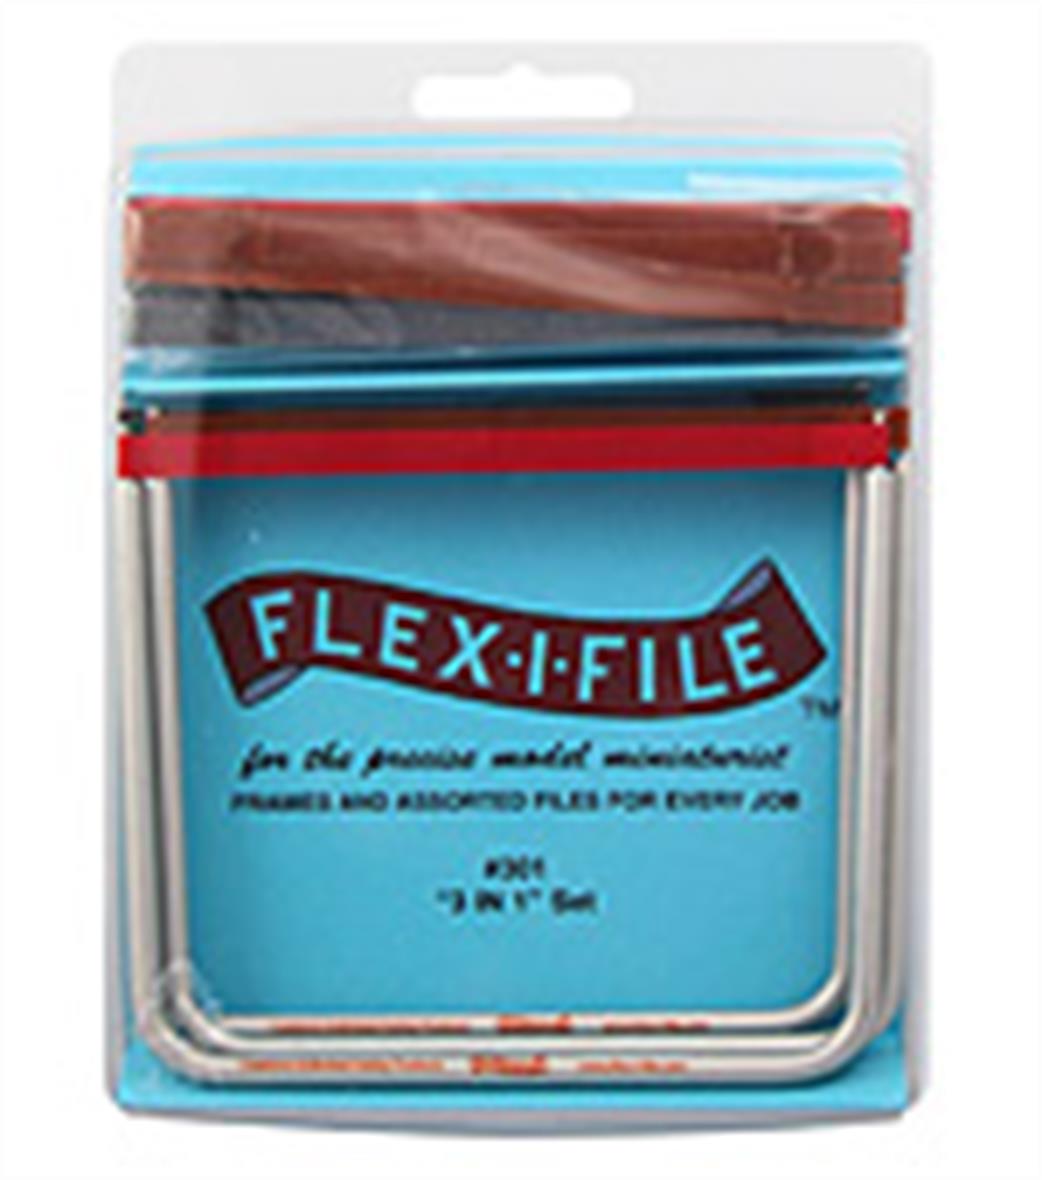 Flex-i-File  301 3 in1 Abrasive Tape & Handles